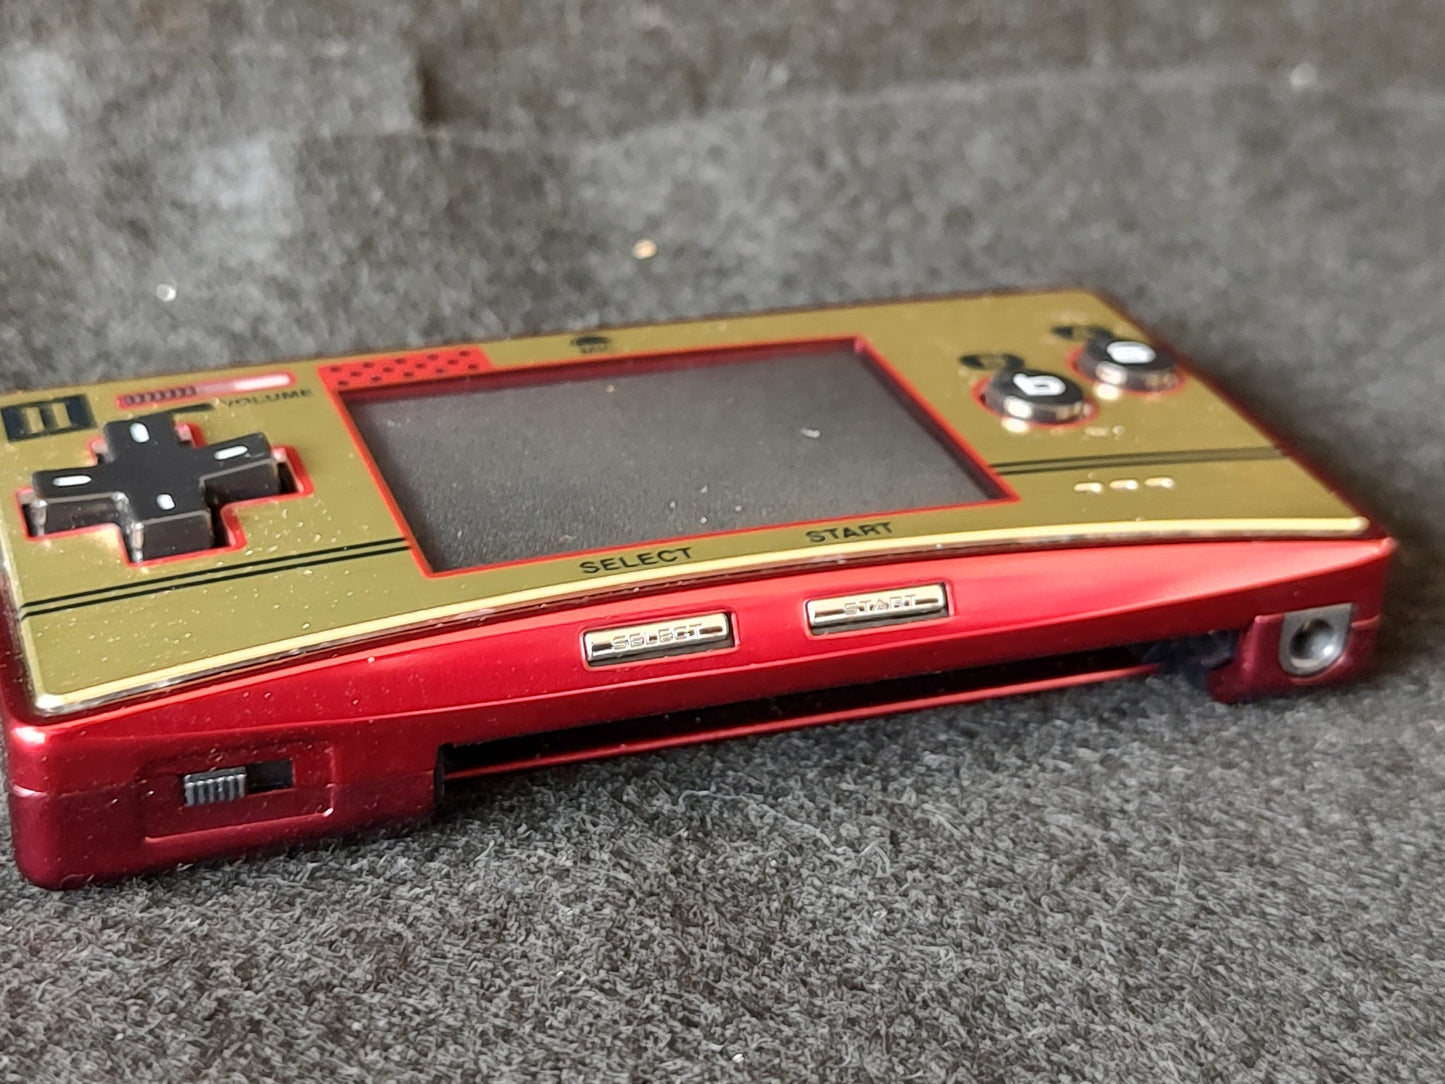 Novelty Faceplate skin Game Boy Micro Famicom 2P Pad Club Nintendo Japan-g0321-